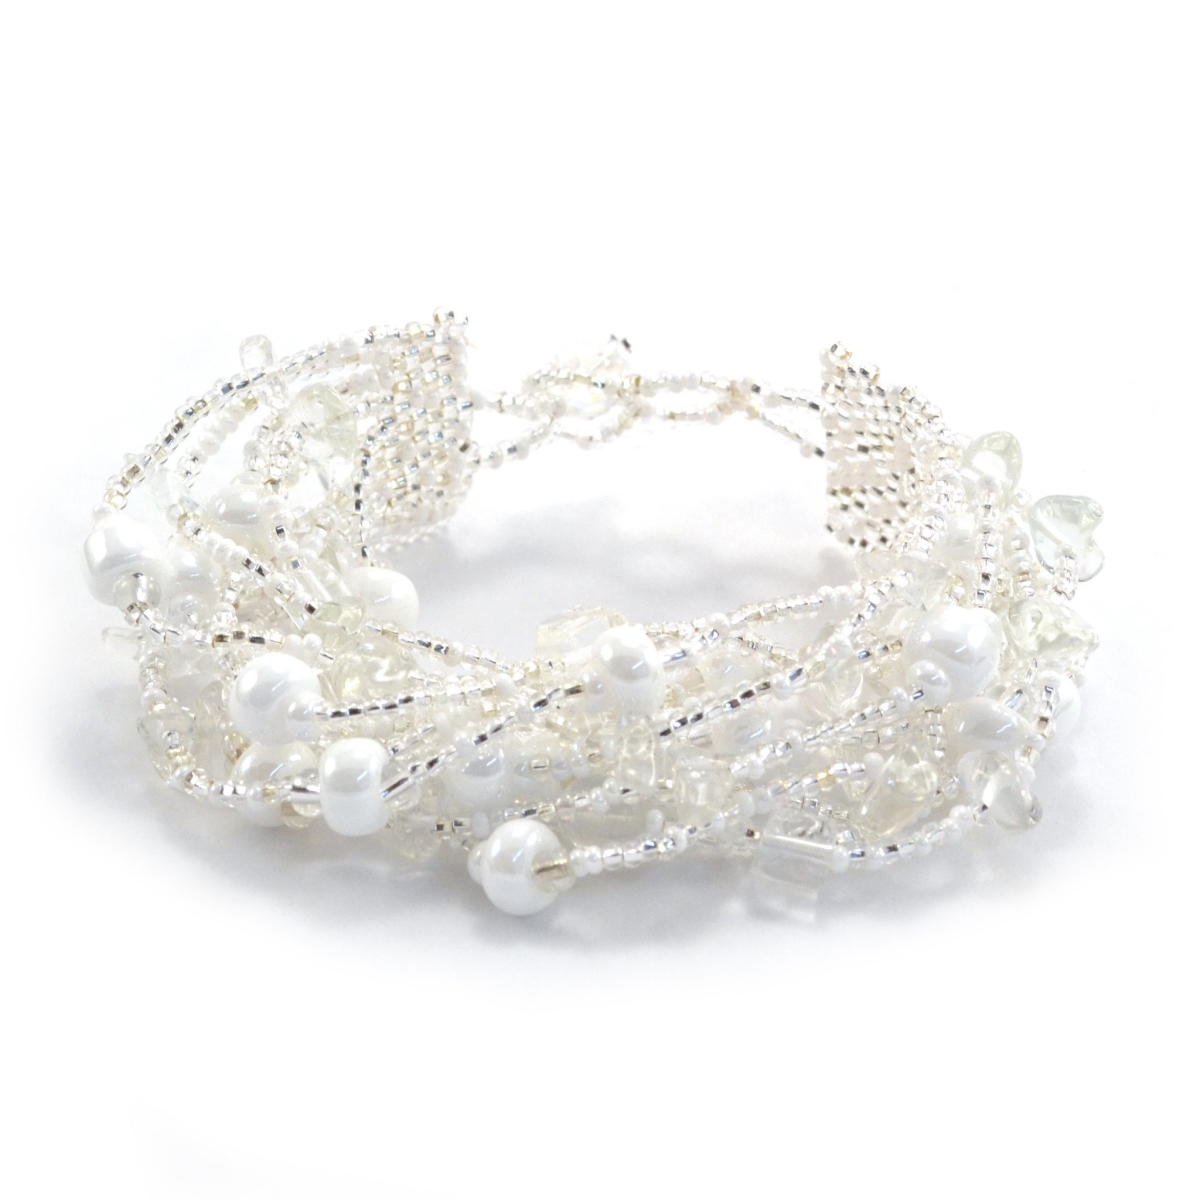 Lijbr-18-2-229081 Handmade & Fair Trade Beach Ball Bracelet, Silver & White